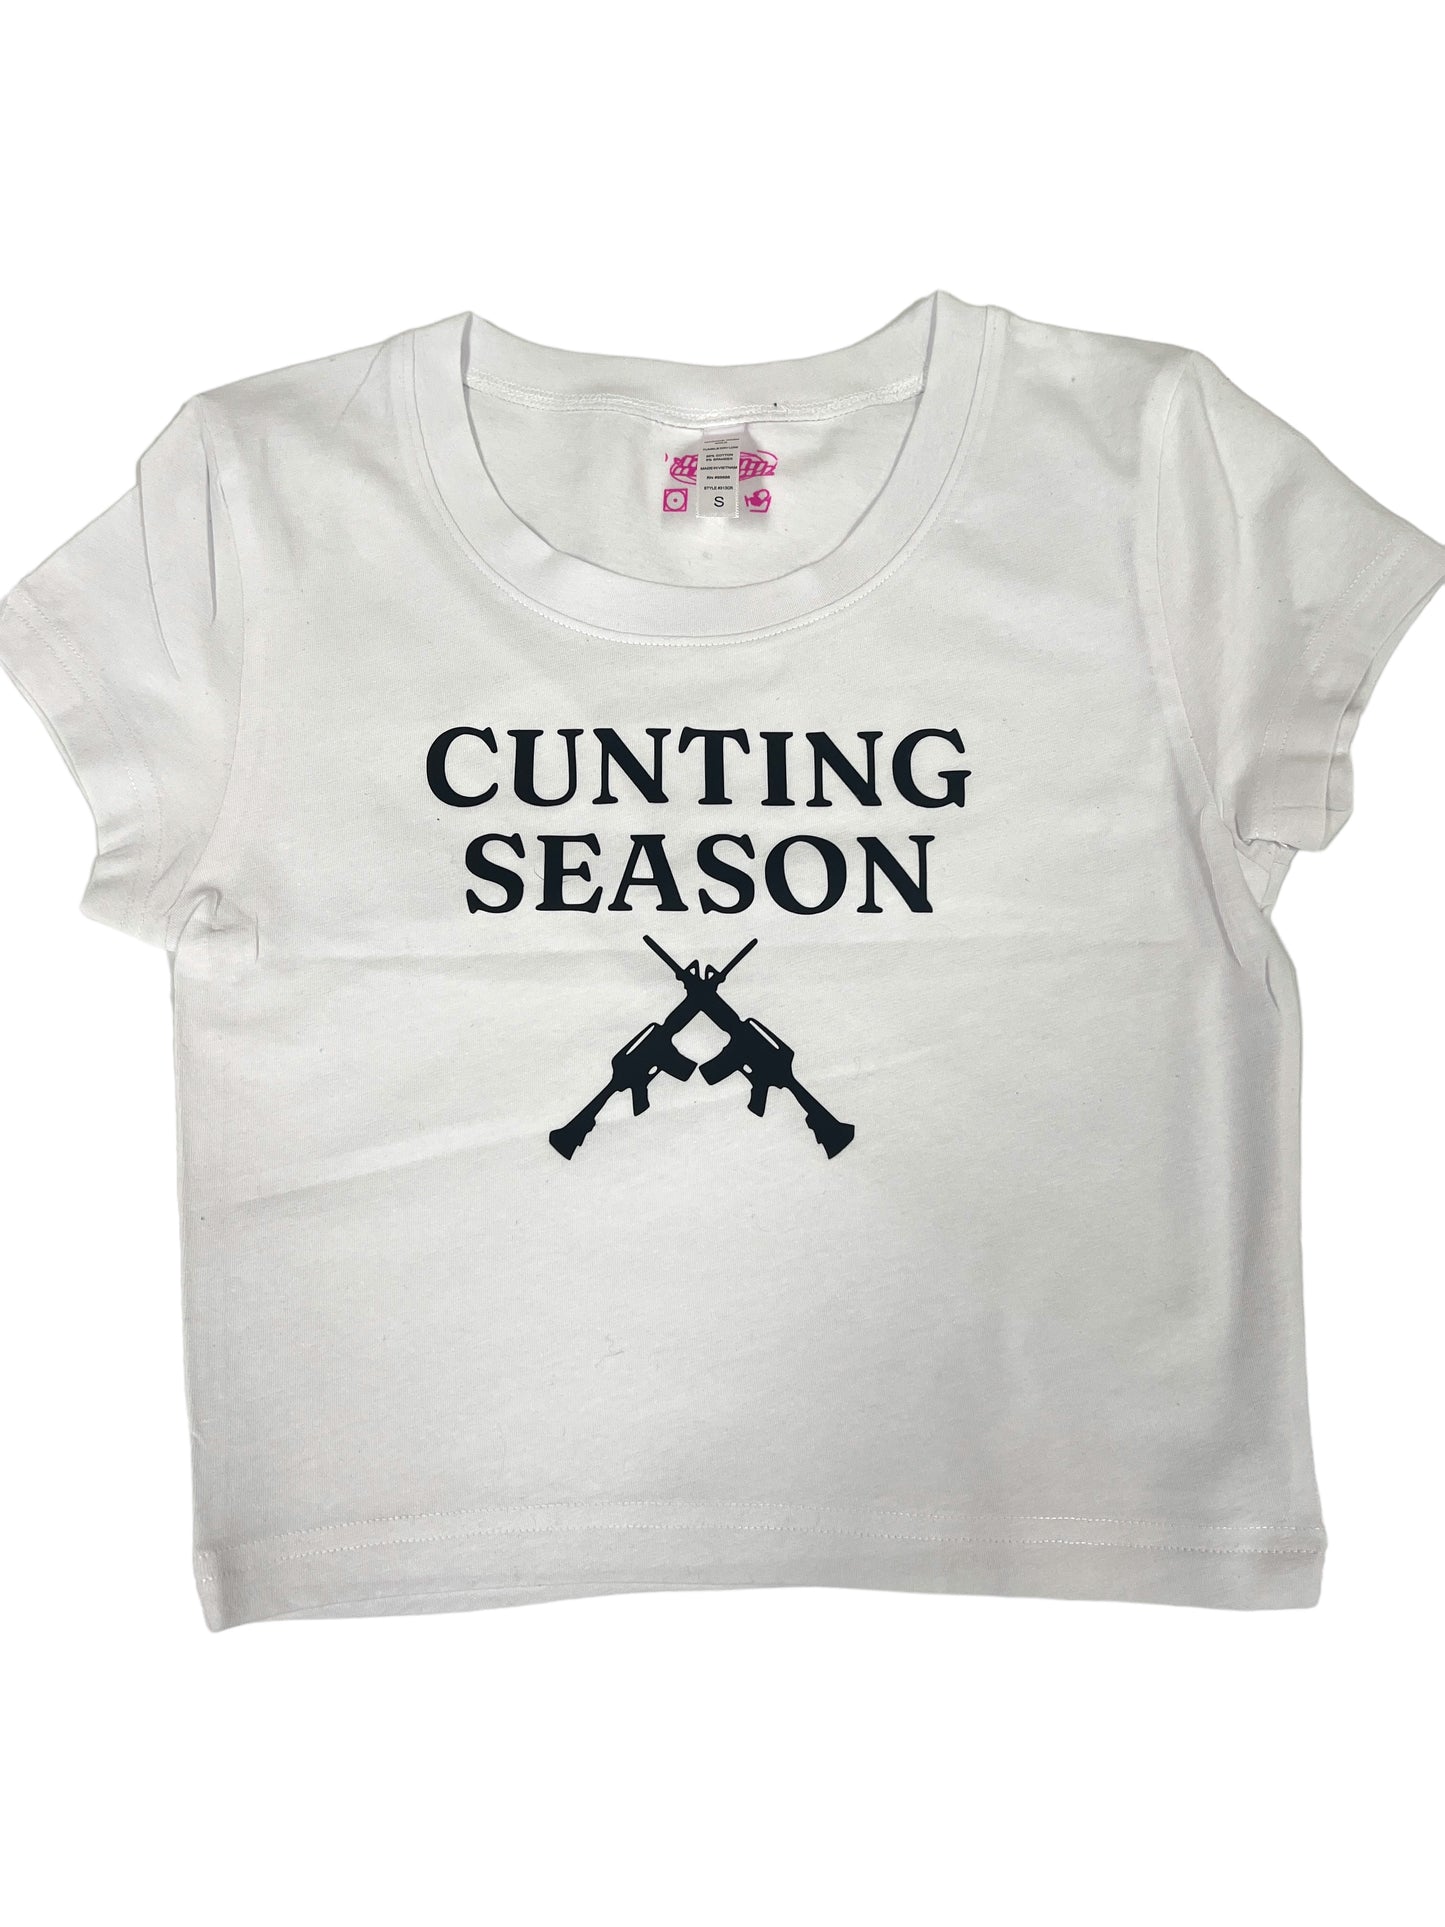 Cunting Season Baby Tee